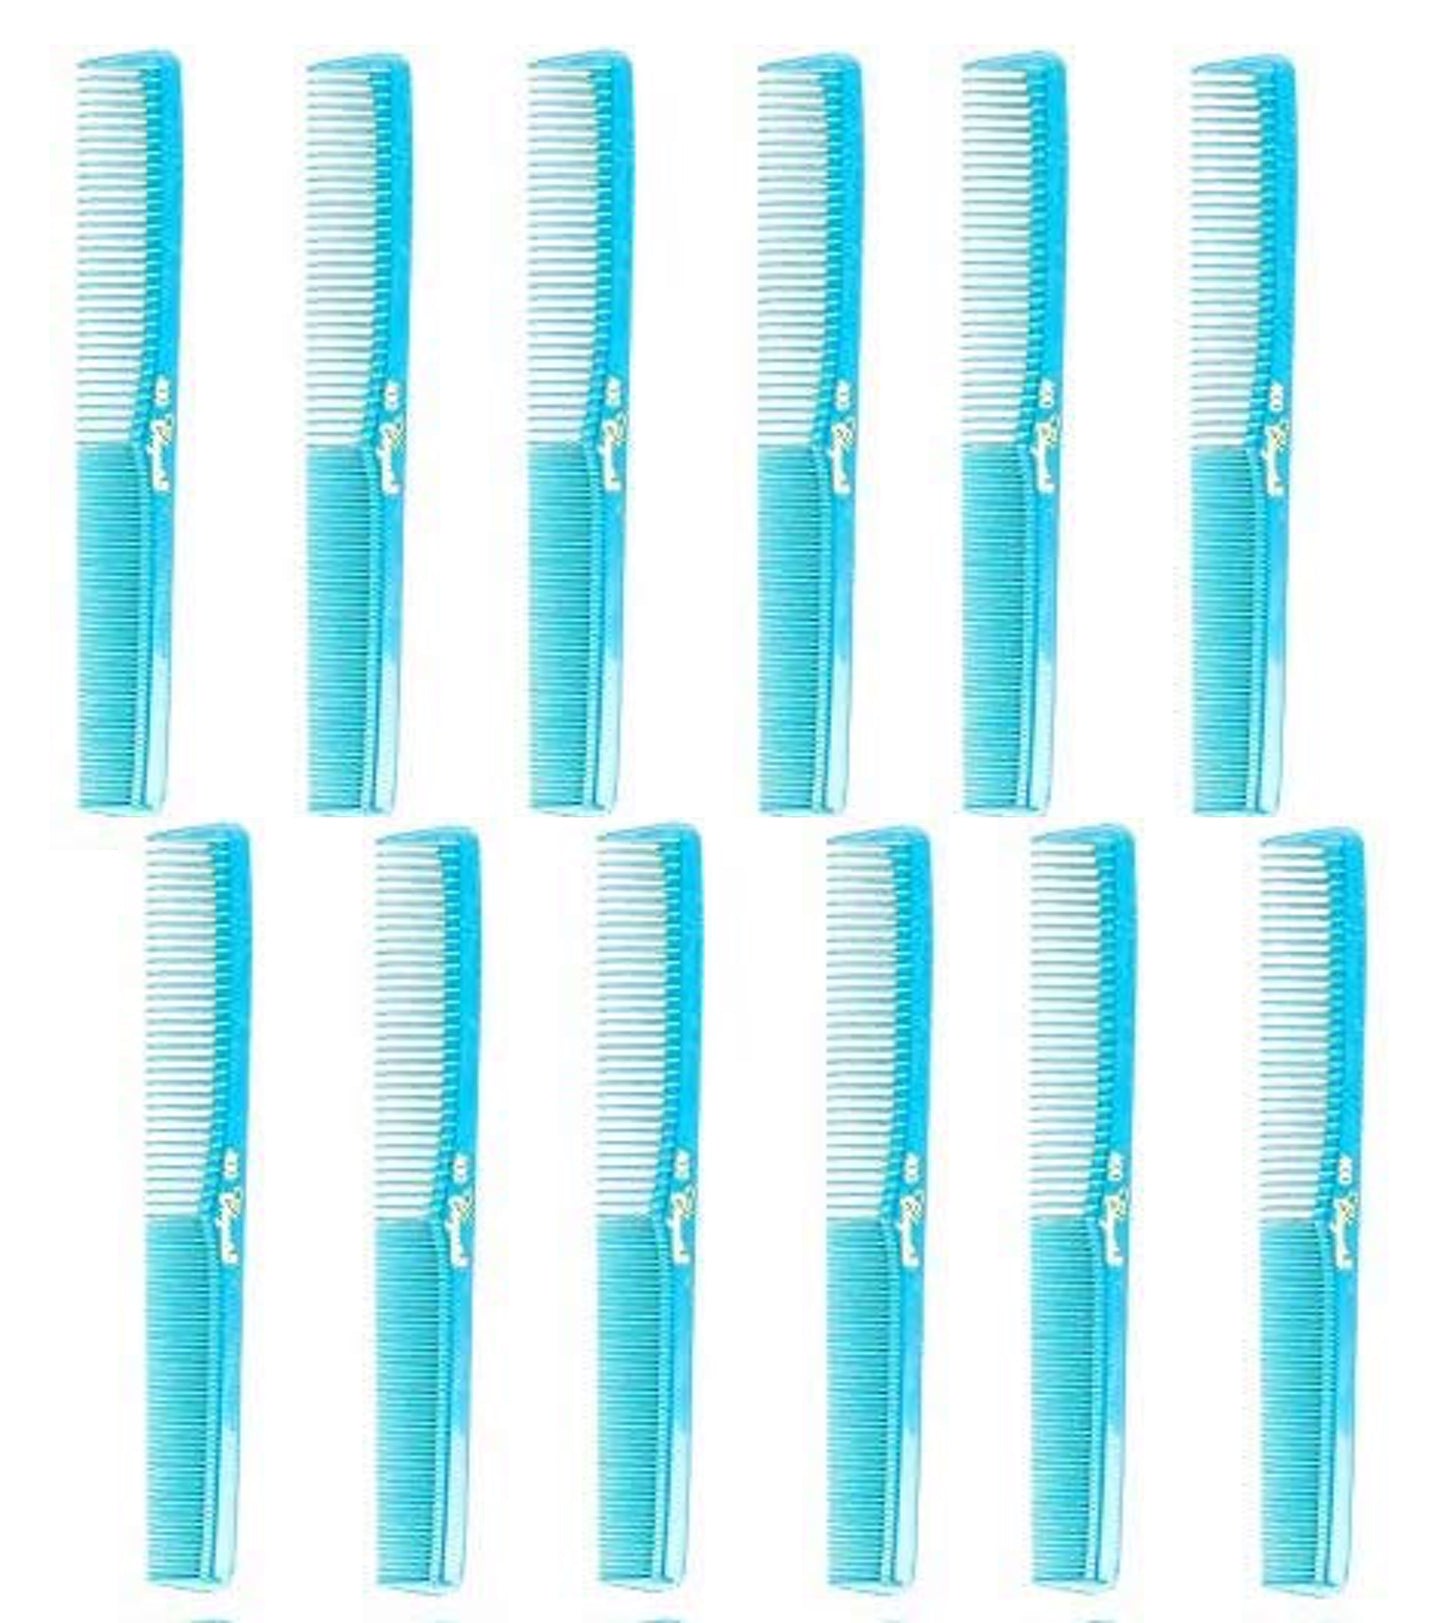 Krest Cleopatra 400 Hair Combs Barber Combs Cutting Combs Stylin Comb  1 DZ.